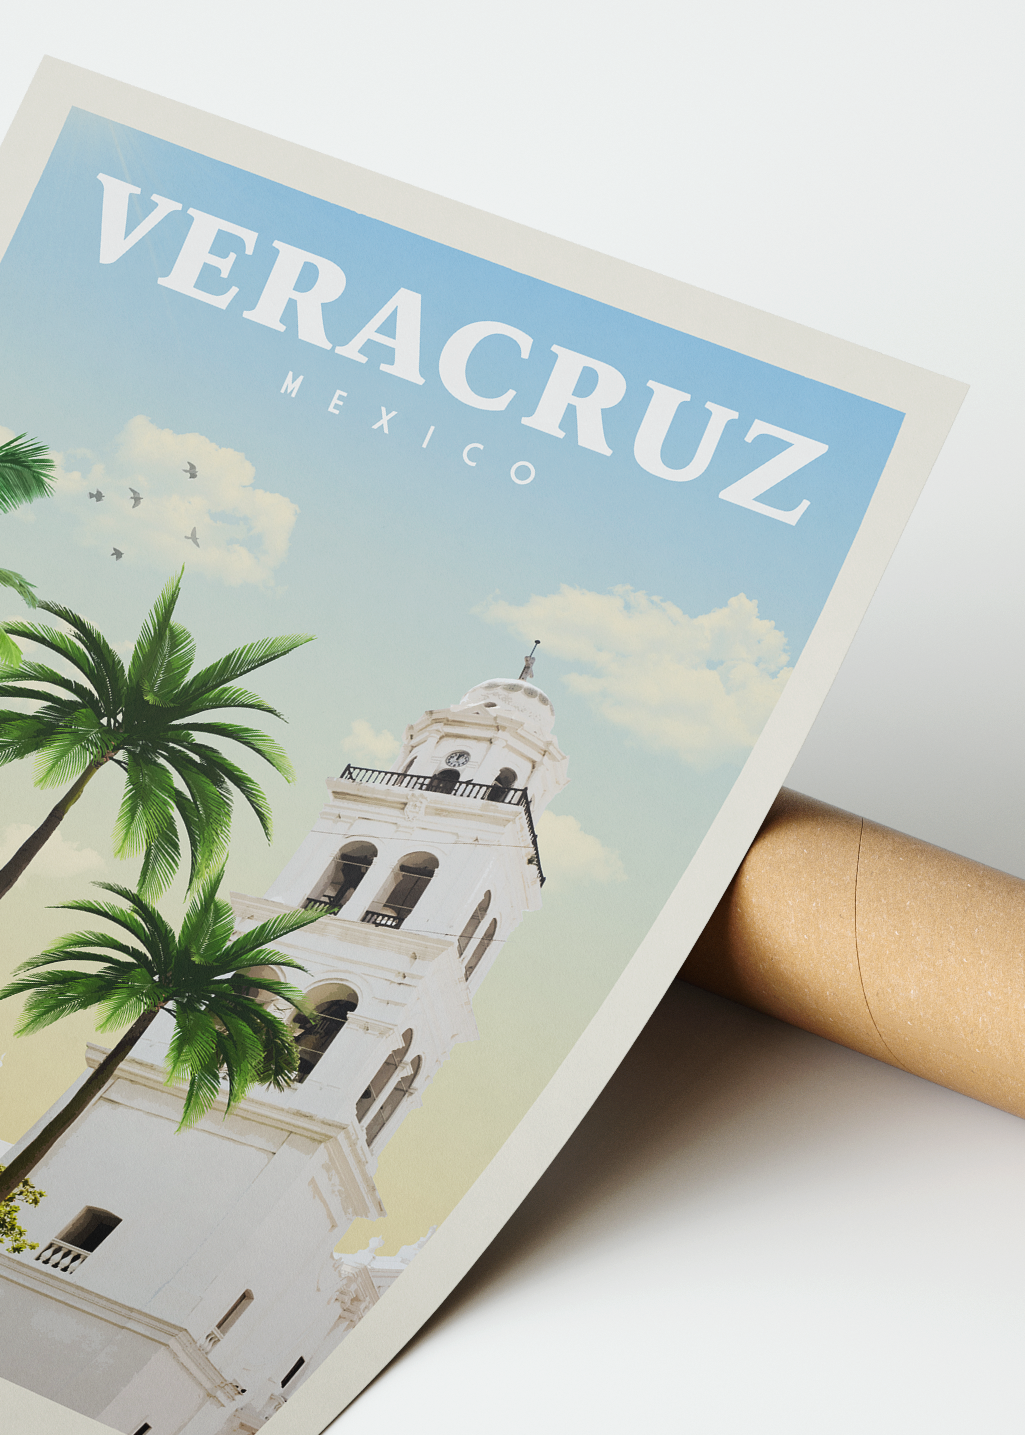 Veracruz, Mexico - Vintage Travel Print